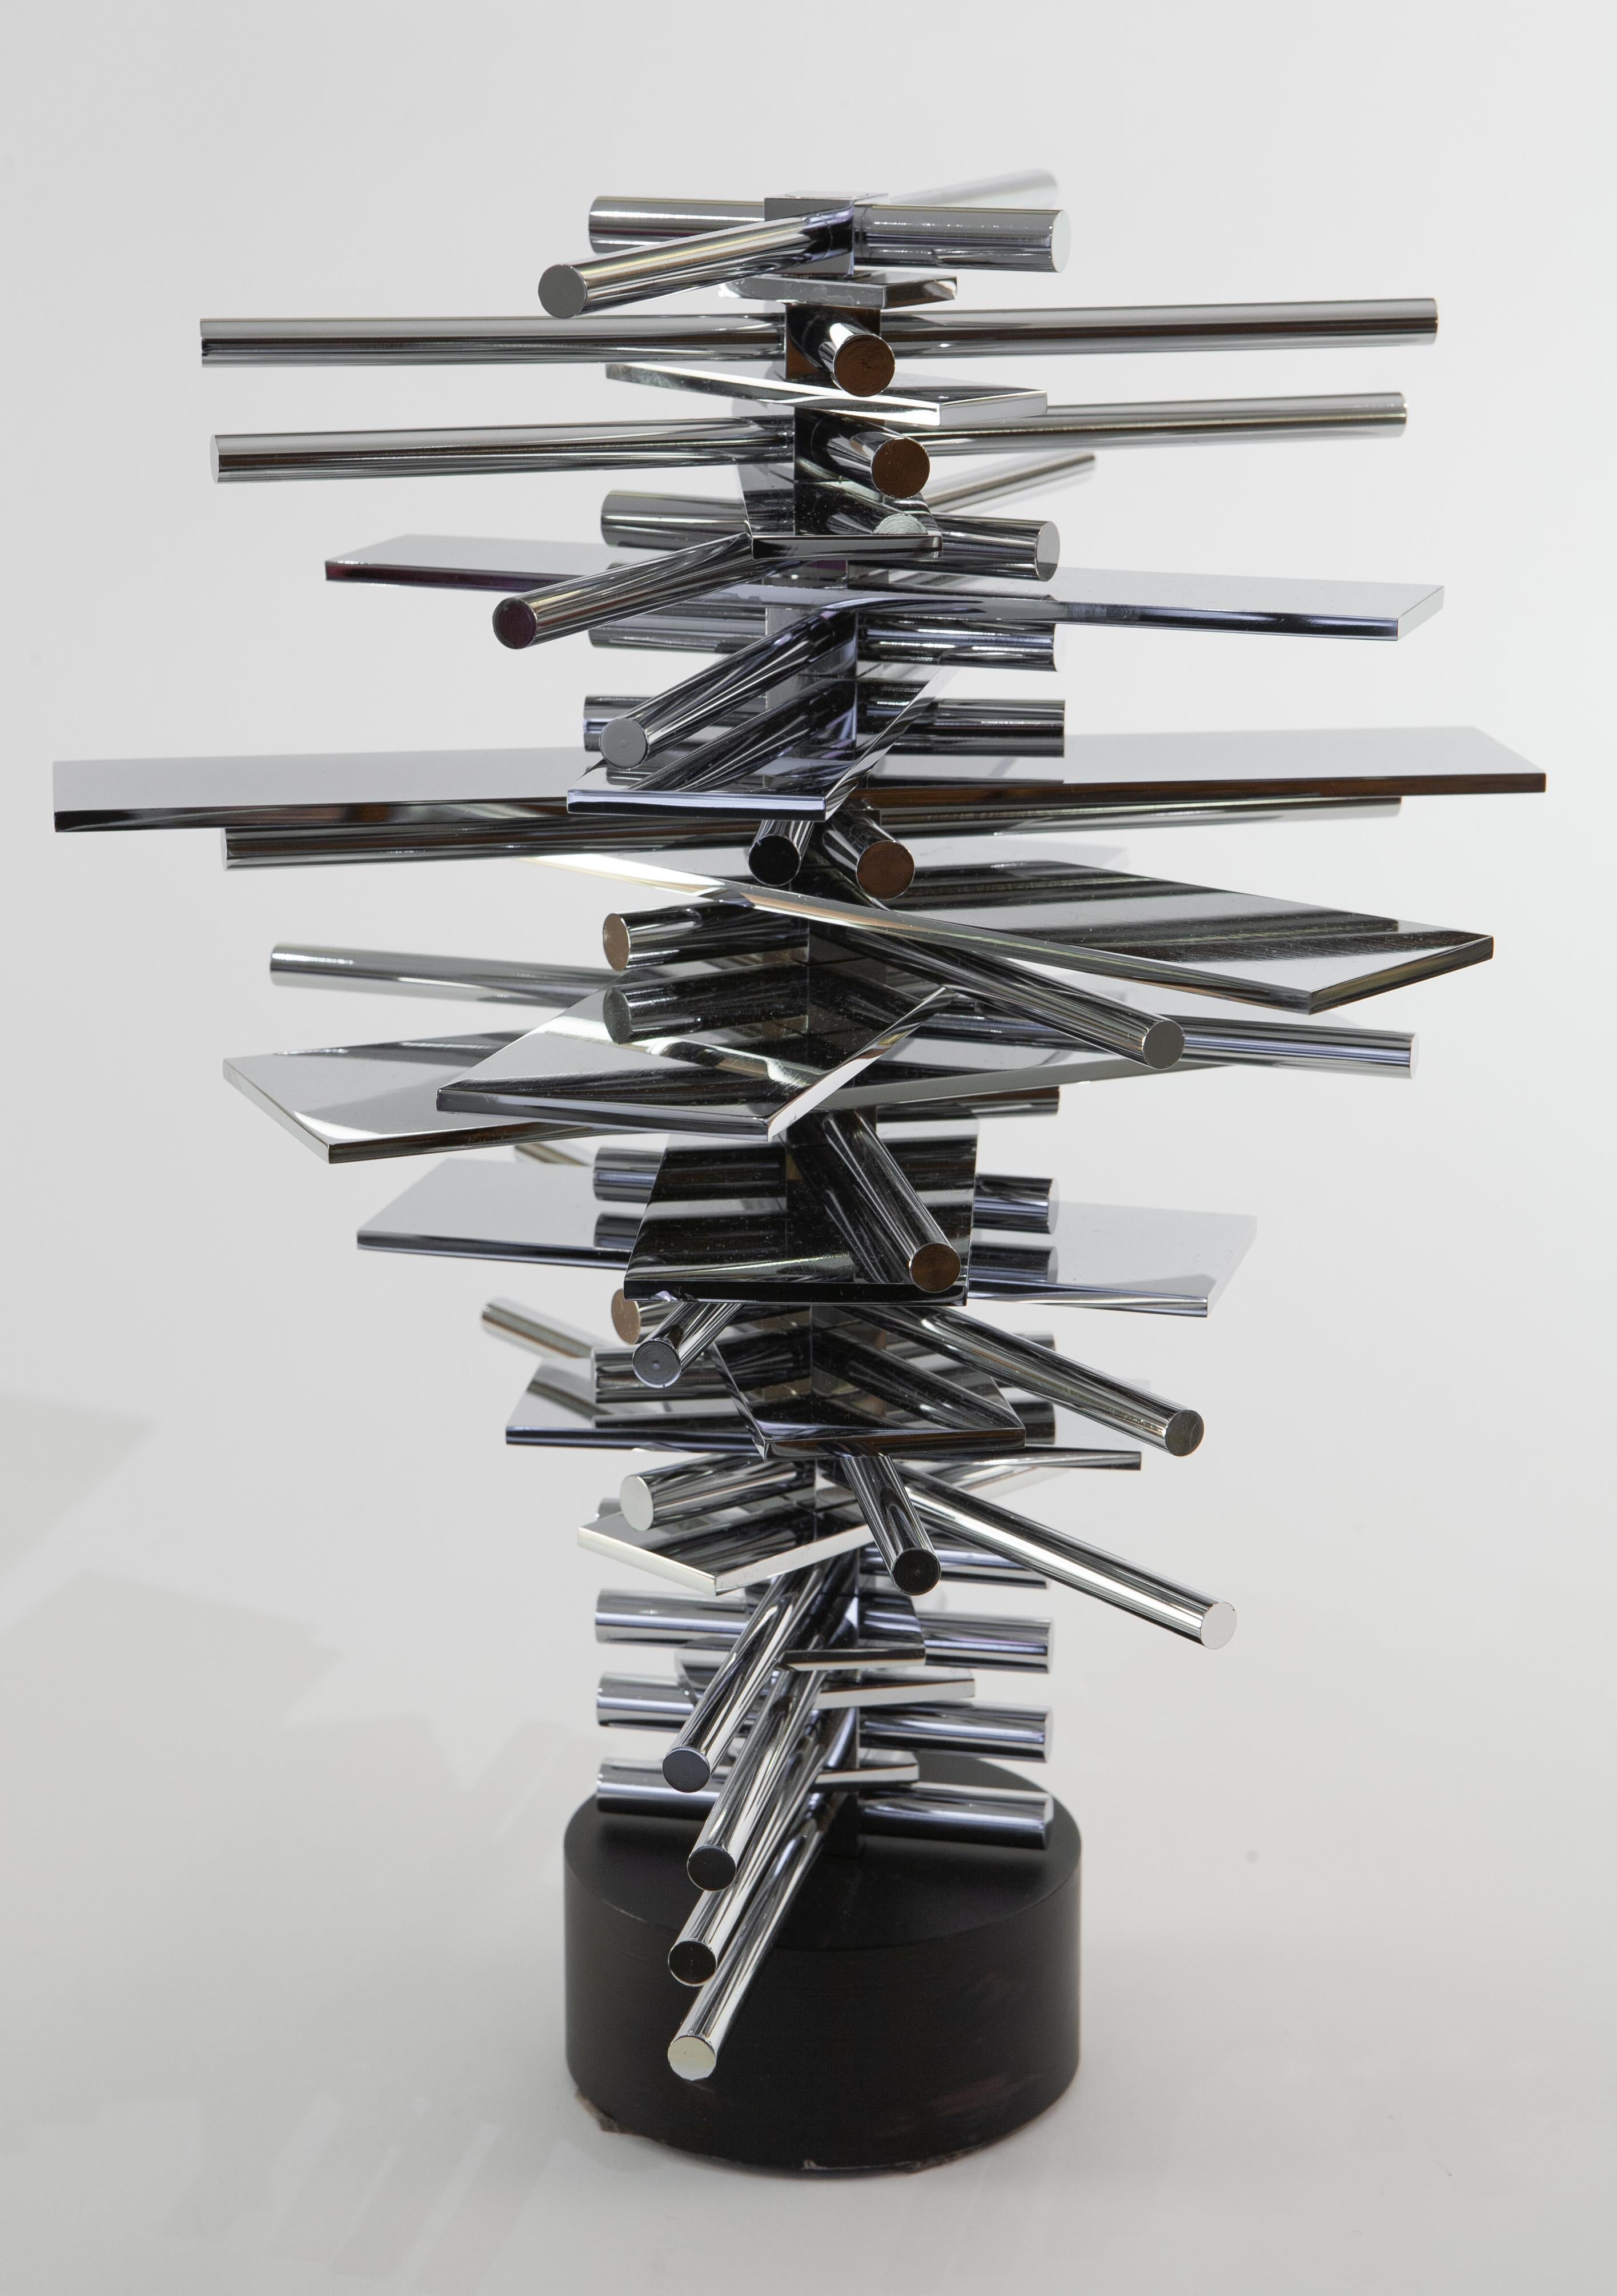 Abstract Sculpture Giuseppe Minoretti - Cadre variable en laiton chromé